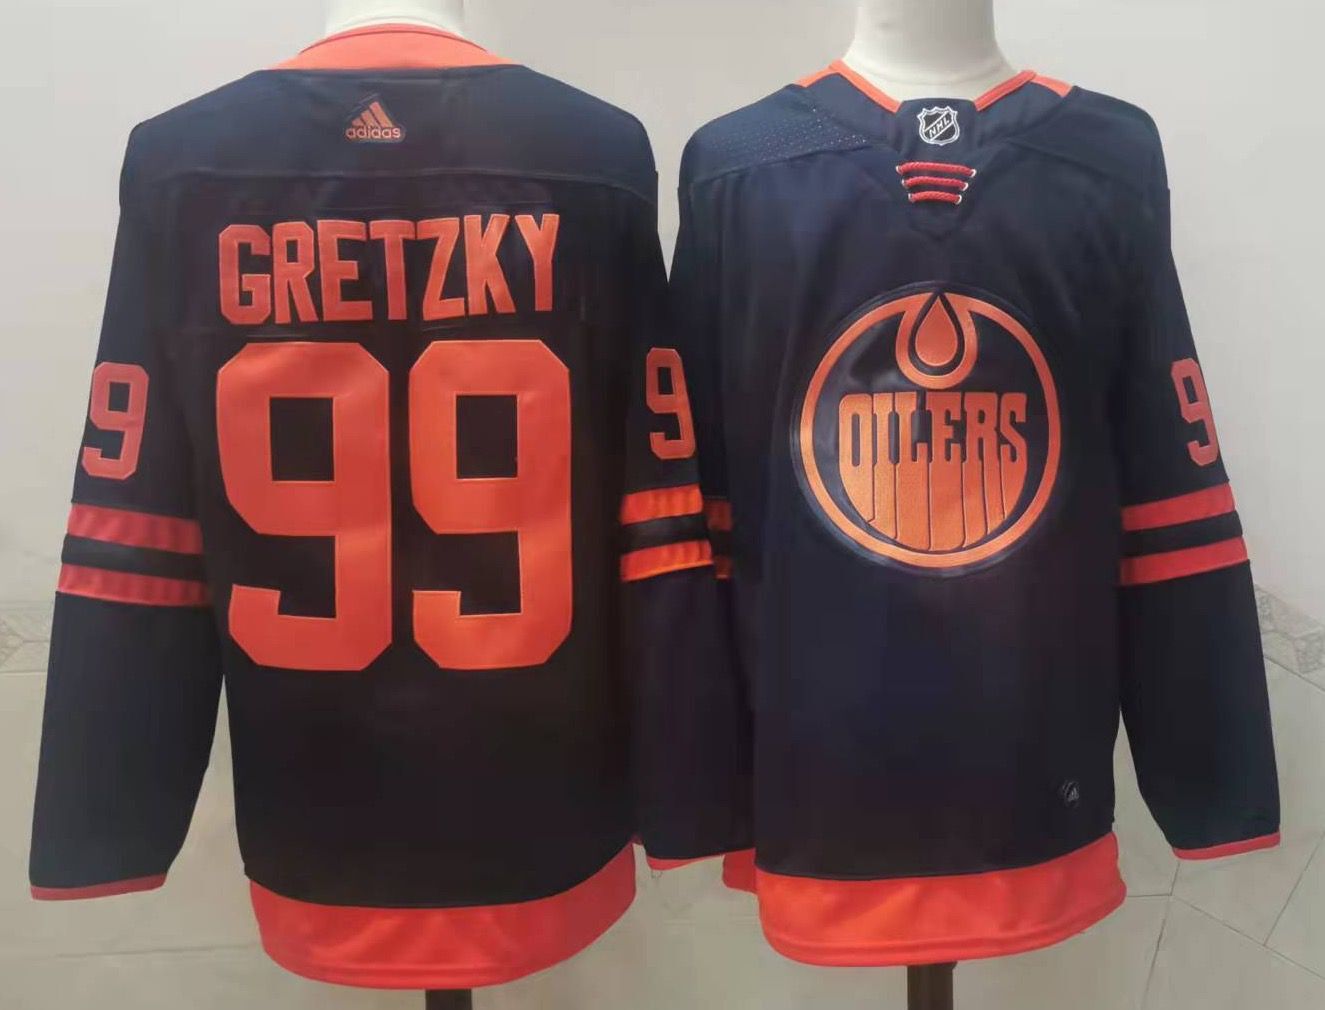 Men's Edmonton Oilers #99 Wayne Gretzky Navy Blue 50th Anniversary Adidas Stitched NHL Jersey